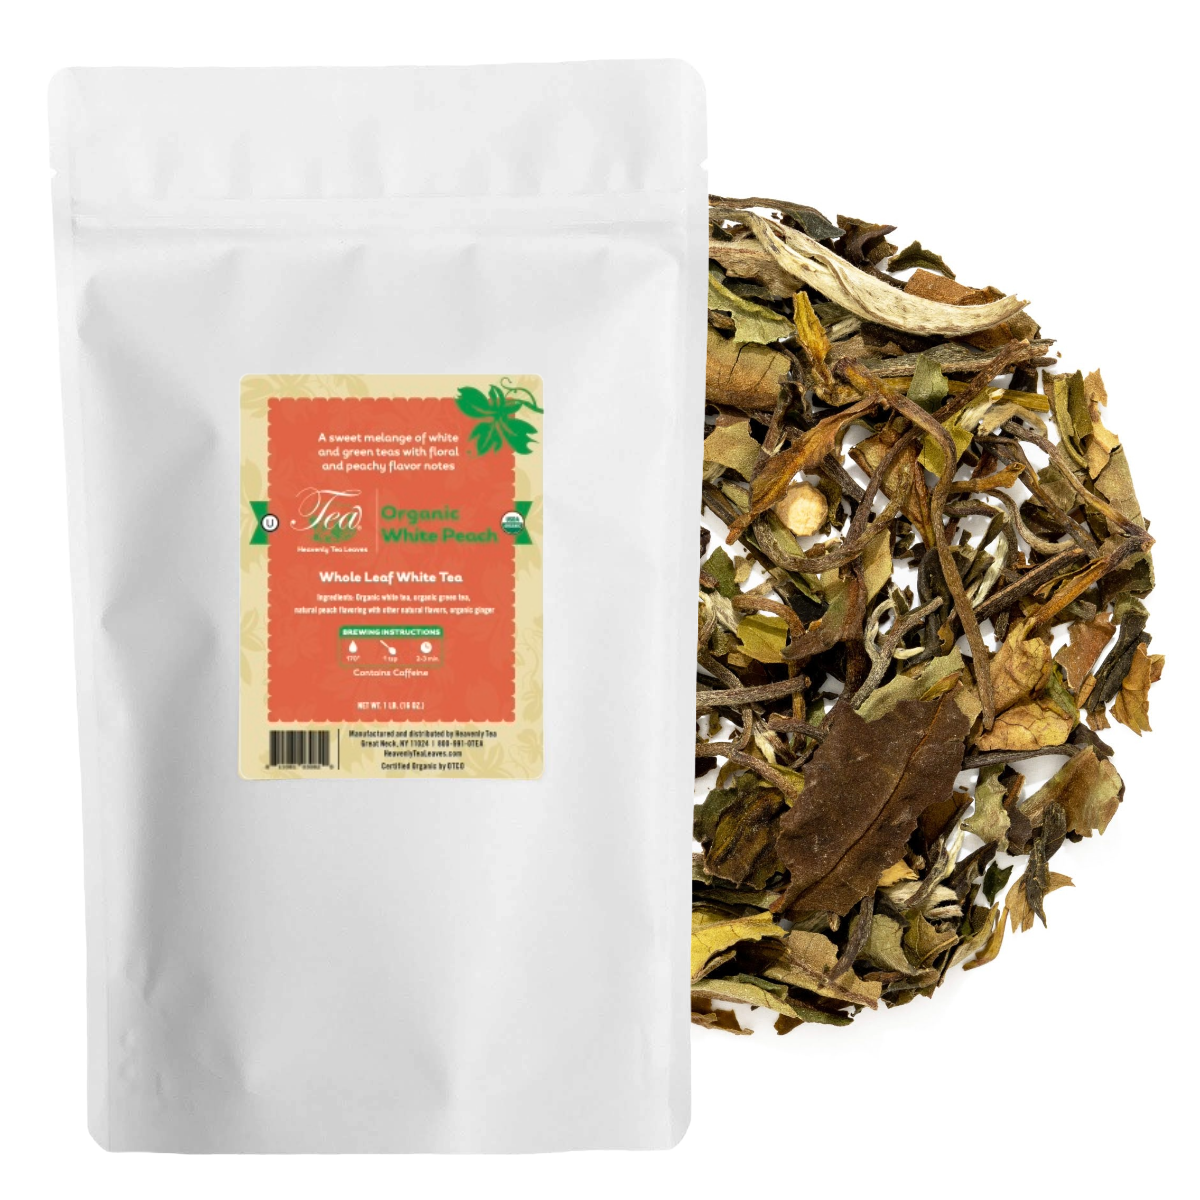  Organic White Peach - Premium Loose Leaf White Tea - Fruity, Great For Hot & Iced Tea | Heavenly Tea Leaves